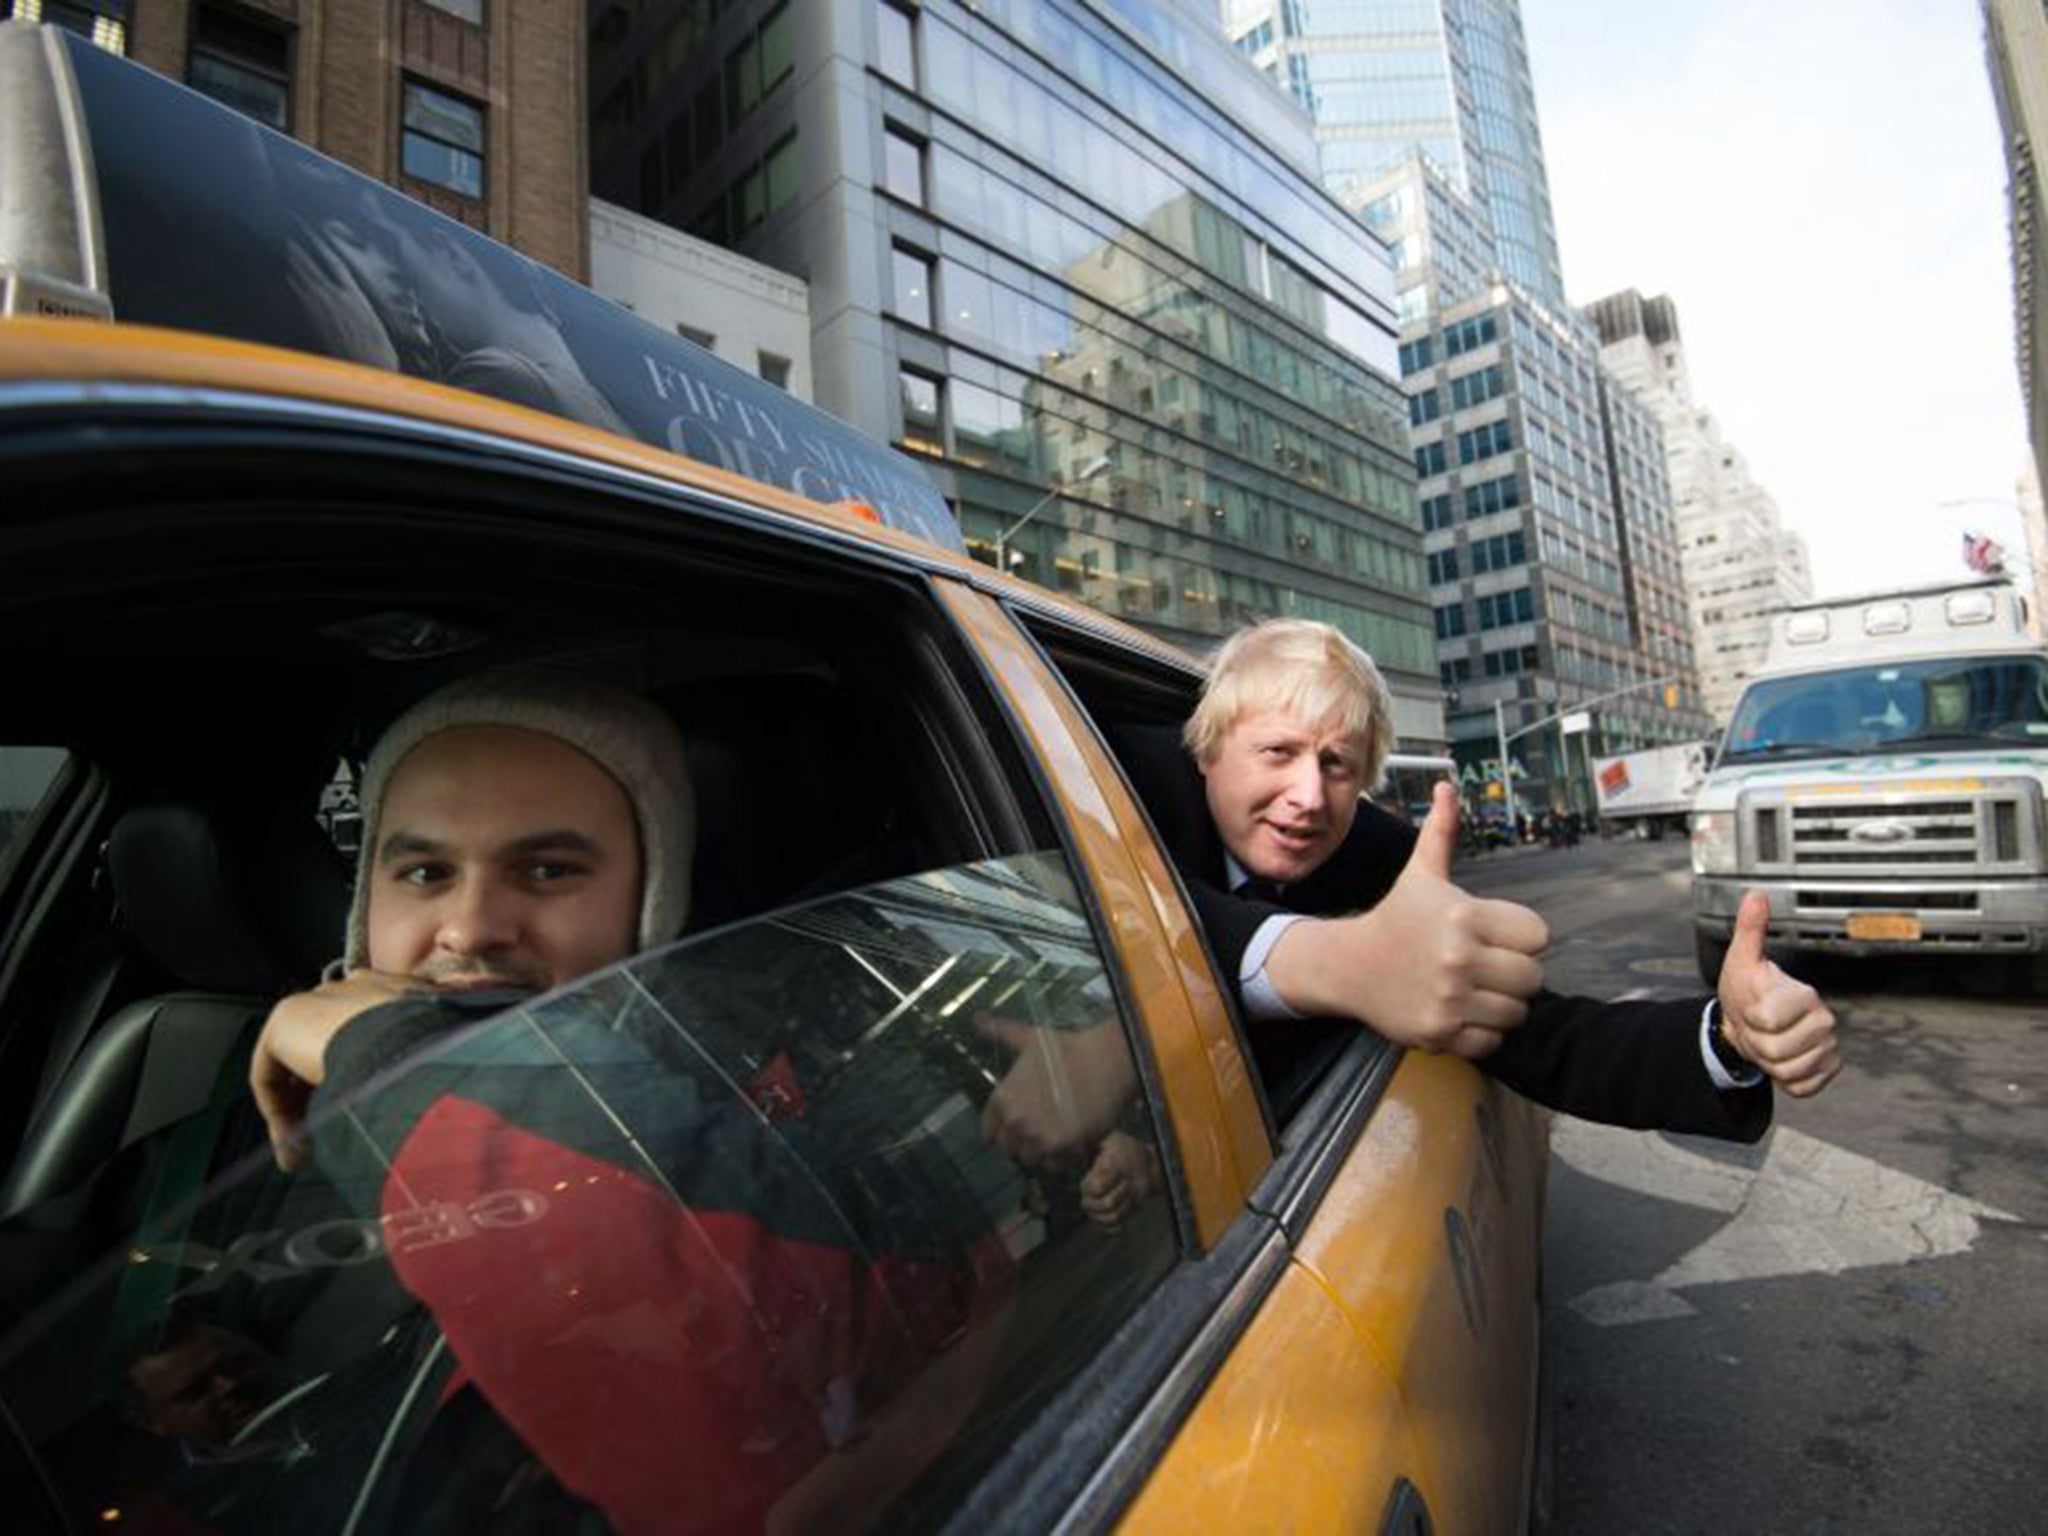 London Mayor Boris Johnson on a trade visit to New York last week